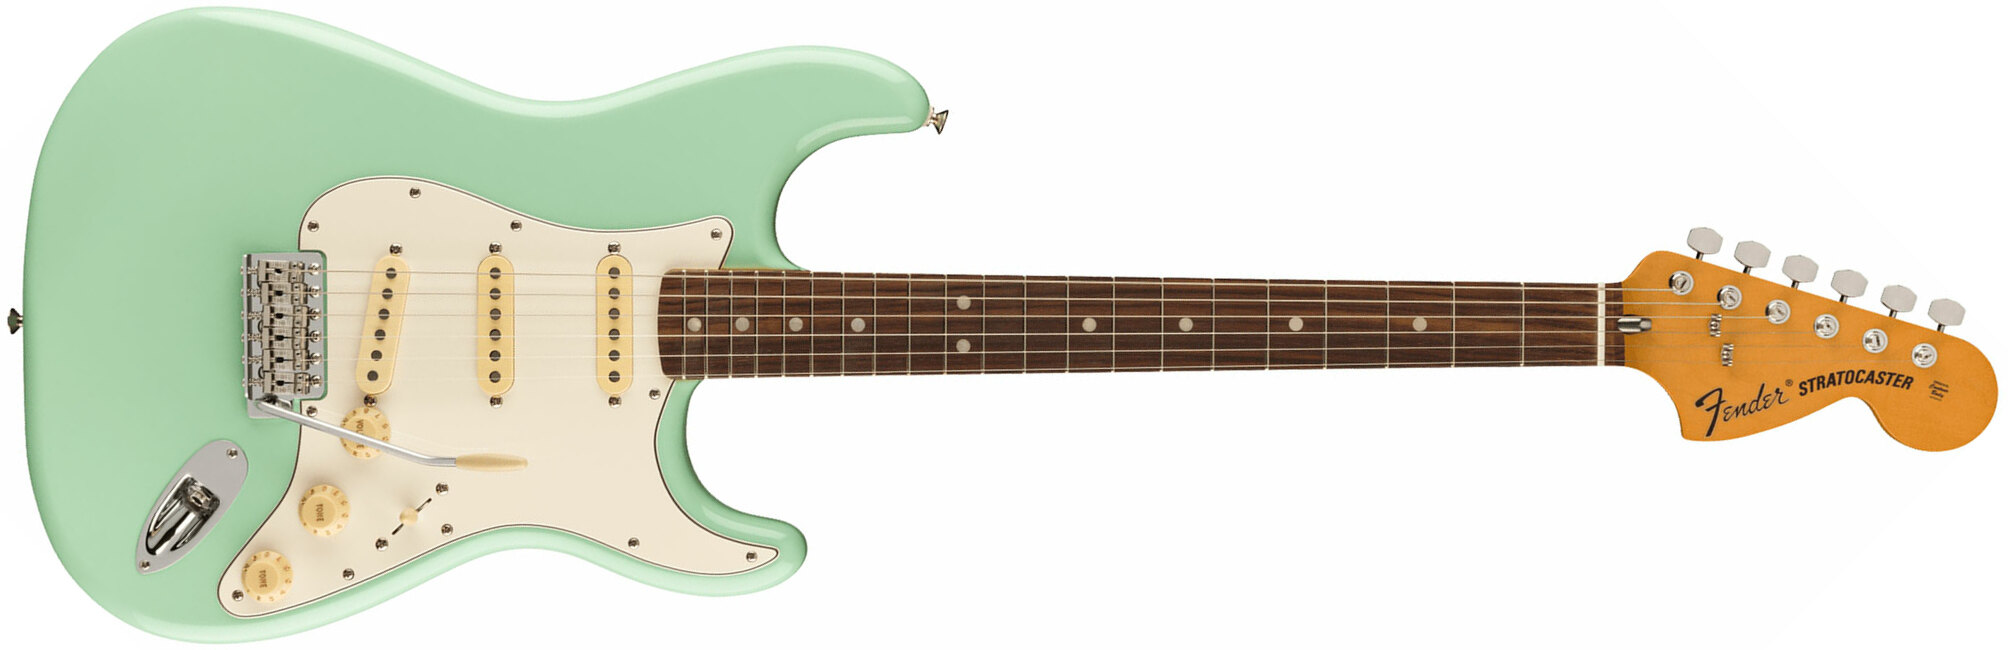 Fender Strat 70s Vintera 2 Mex 3s Trem Rw - Surf Green - Str shape electric guitar - Main picture